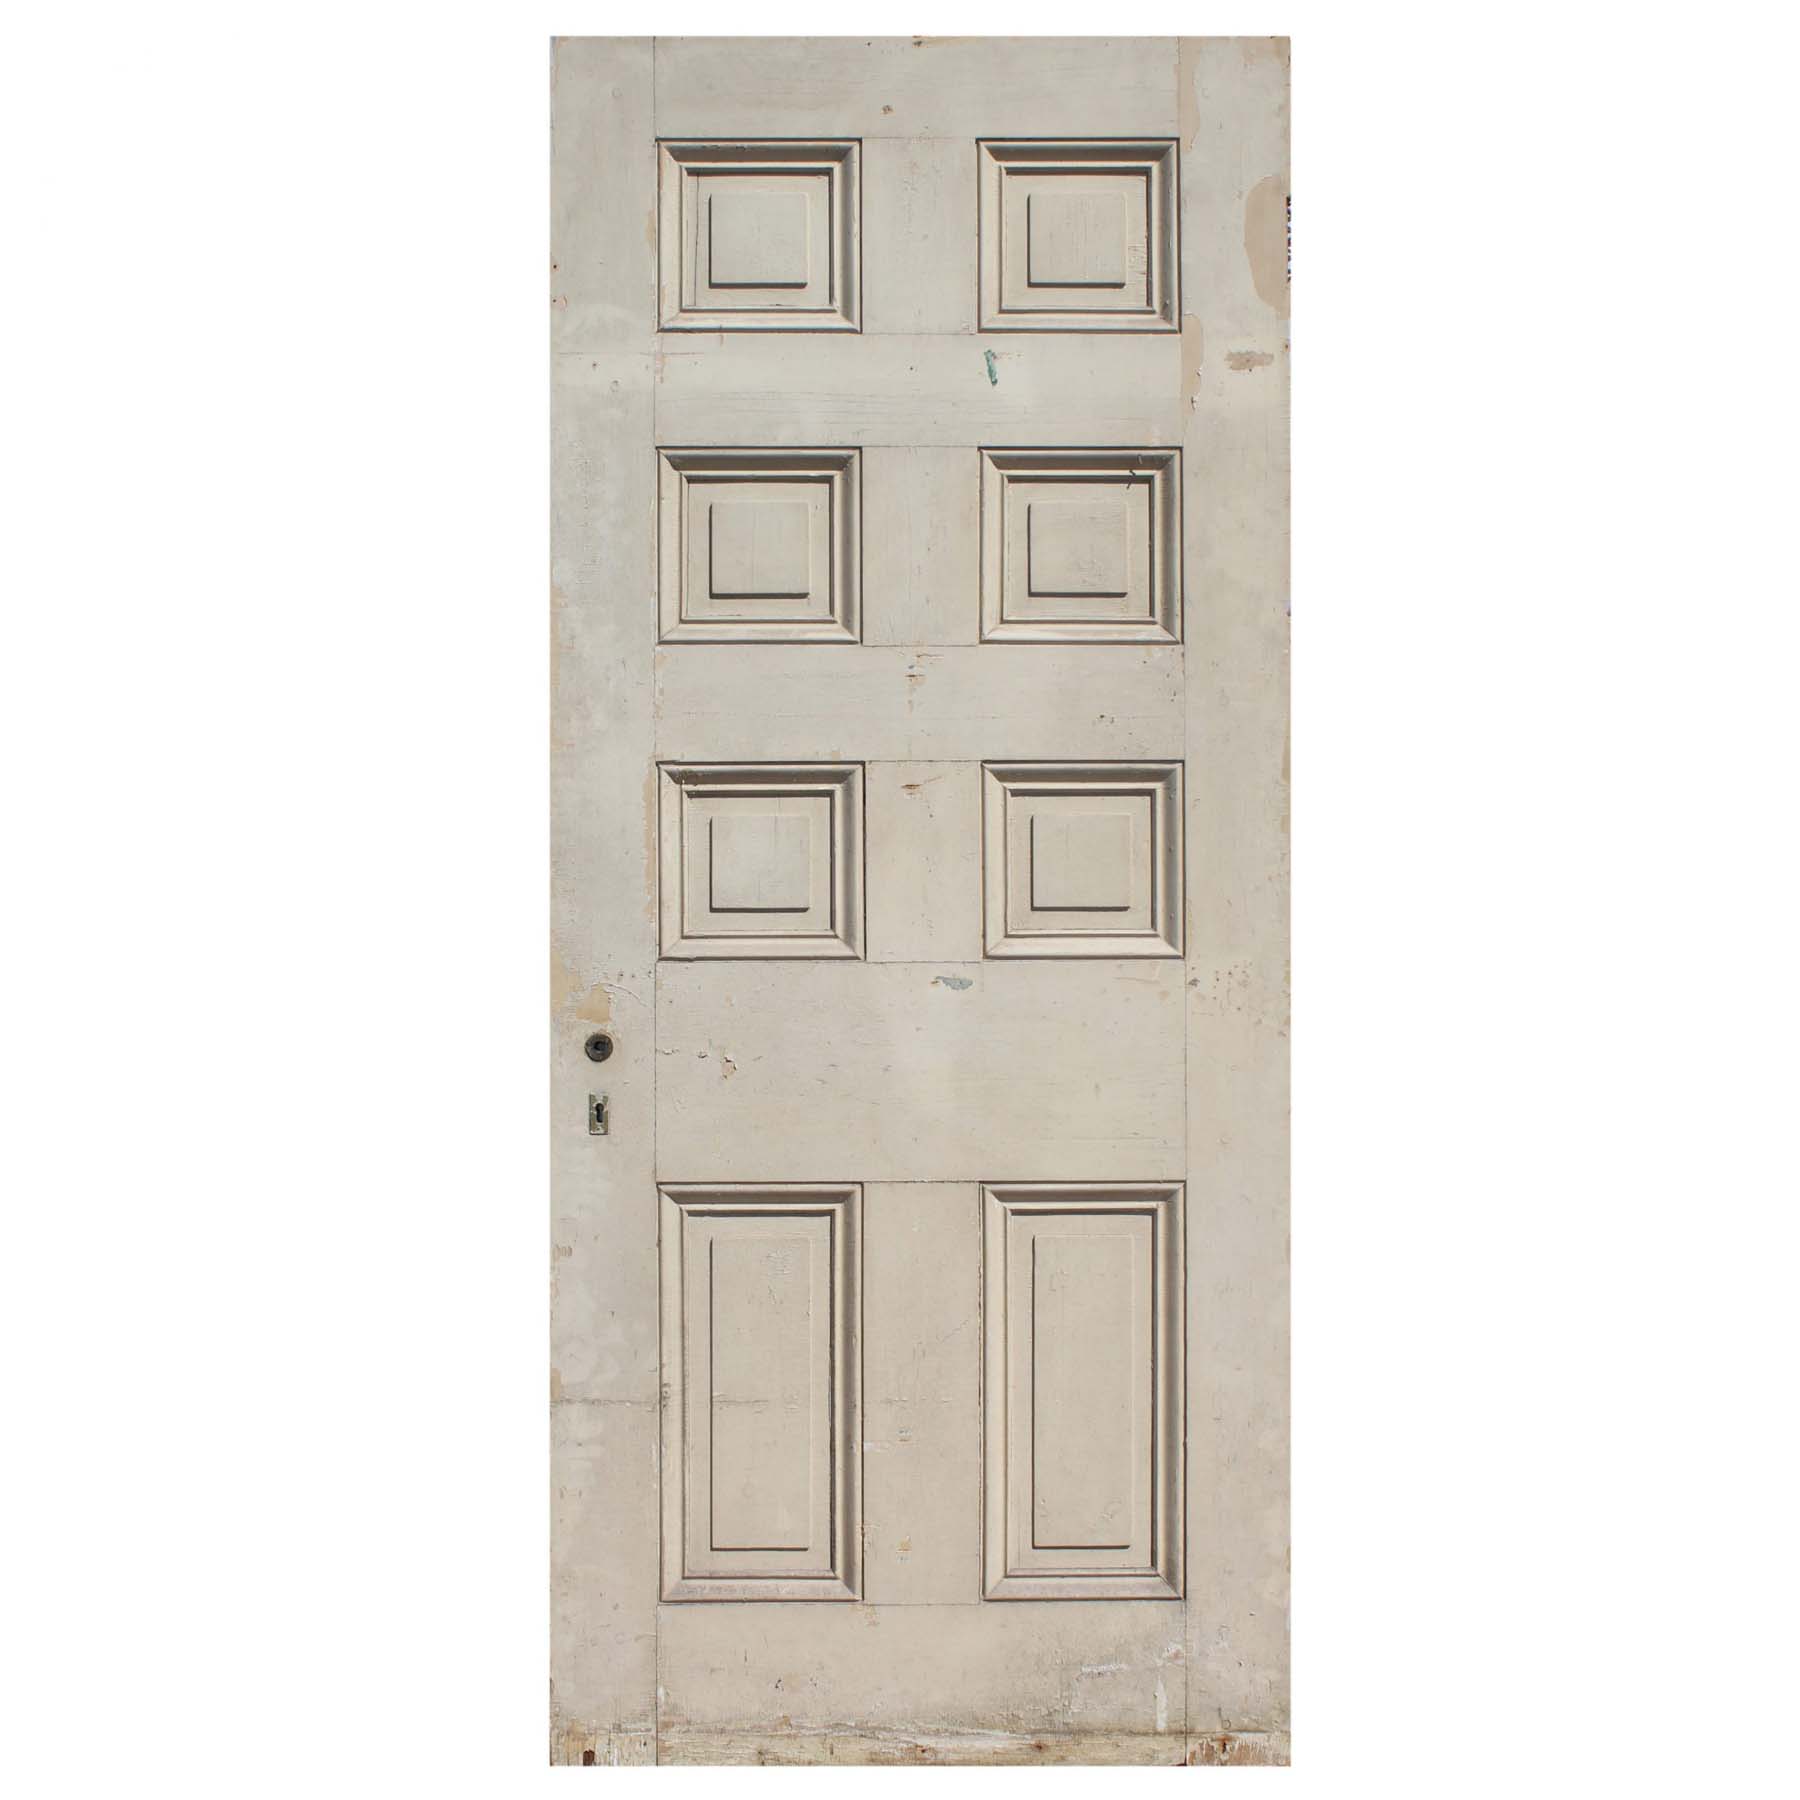 SOLD Antique 36" Solid Wood Door with Recessed Panels -67660